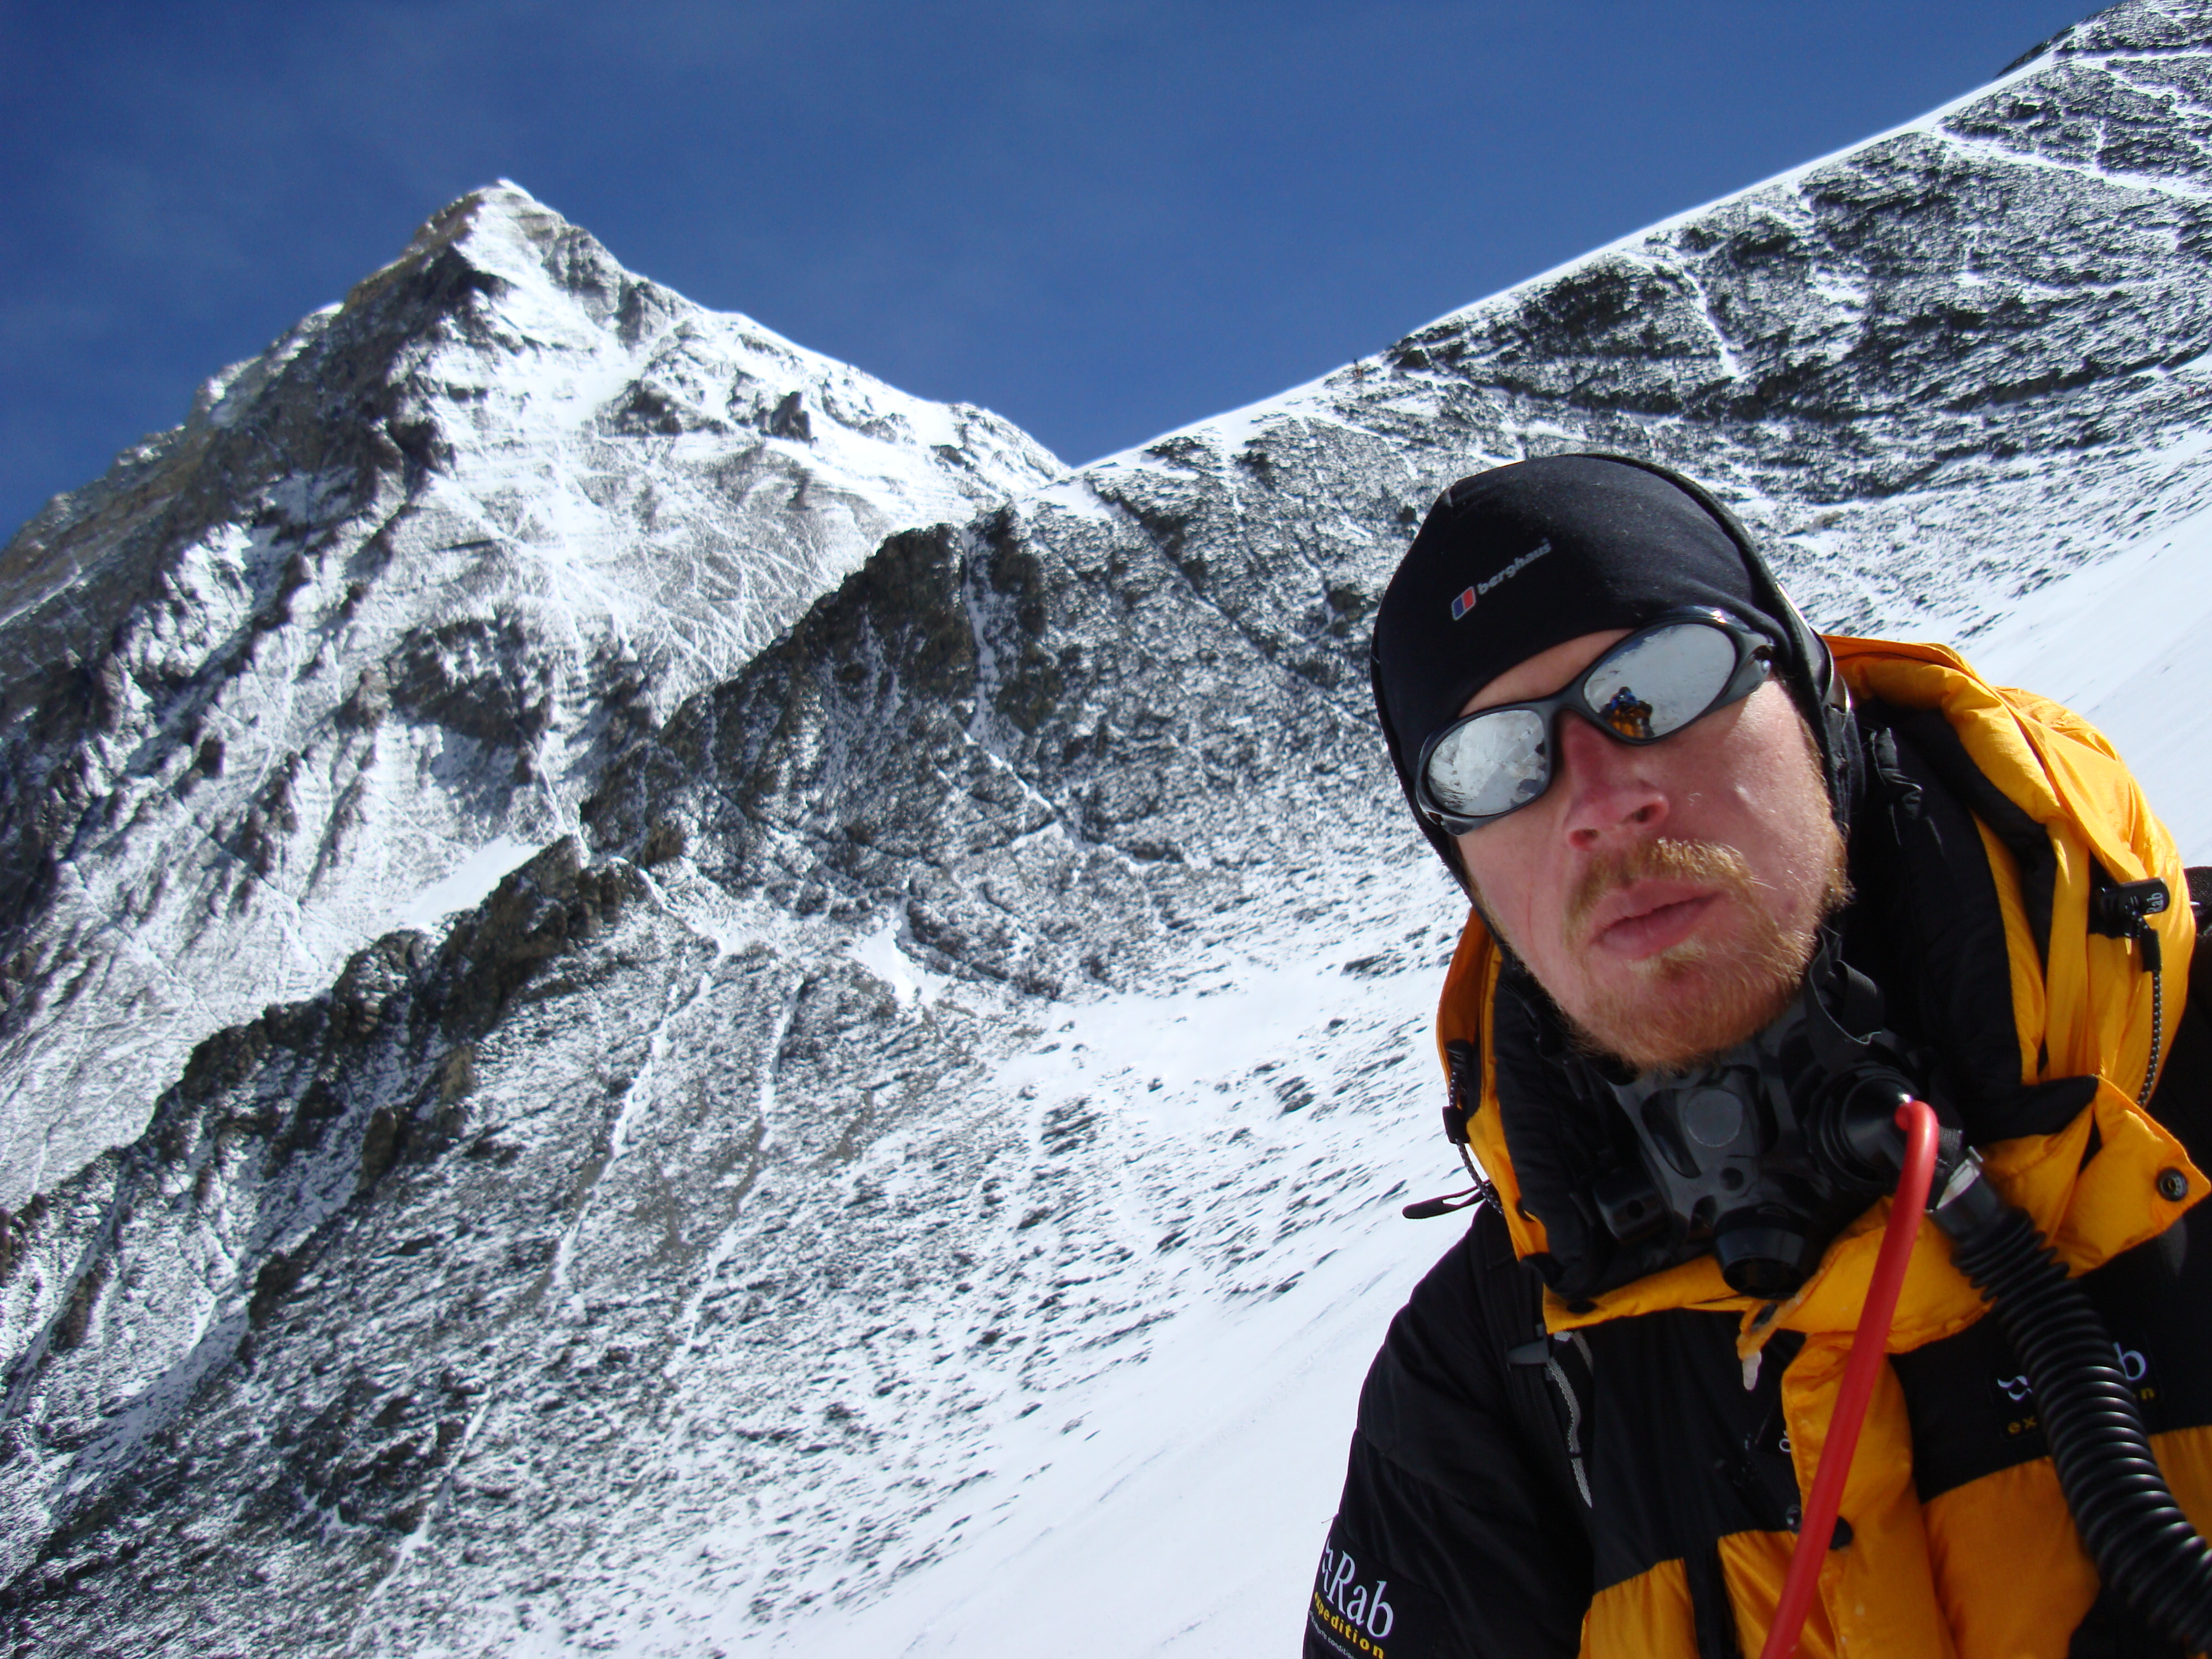 The Lhotse Face on Mount Everest